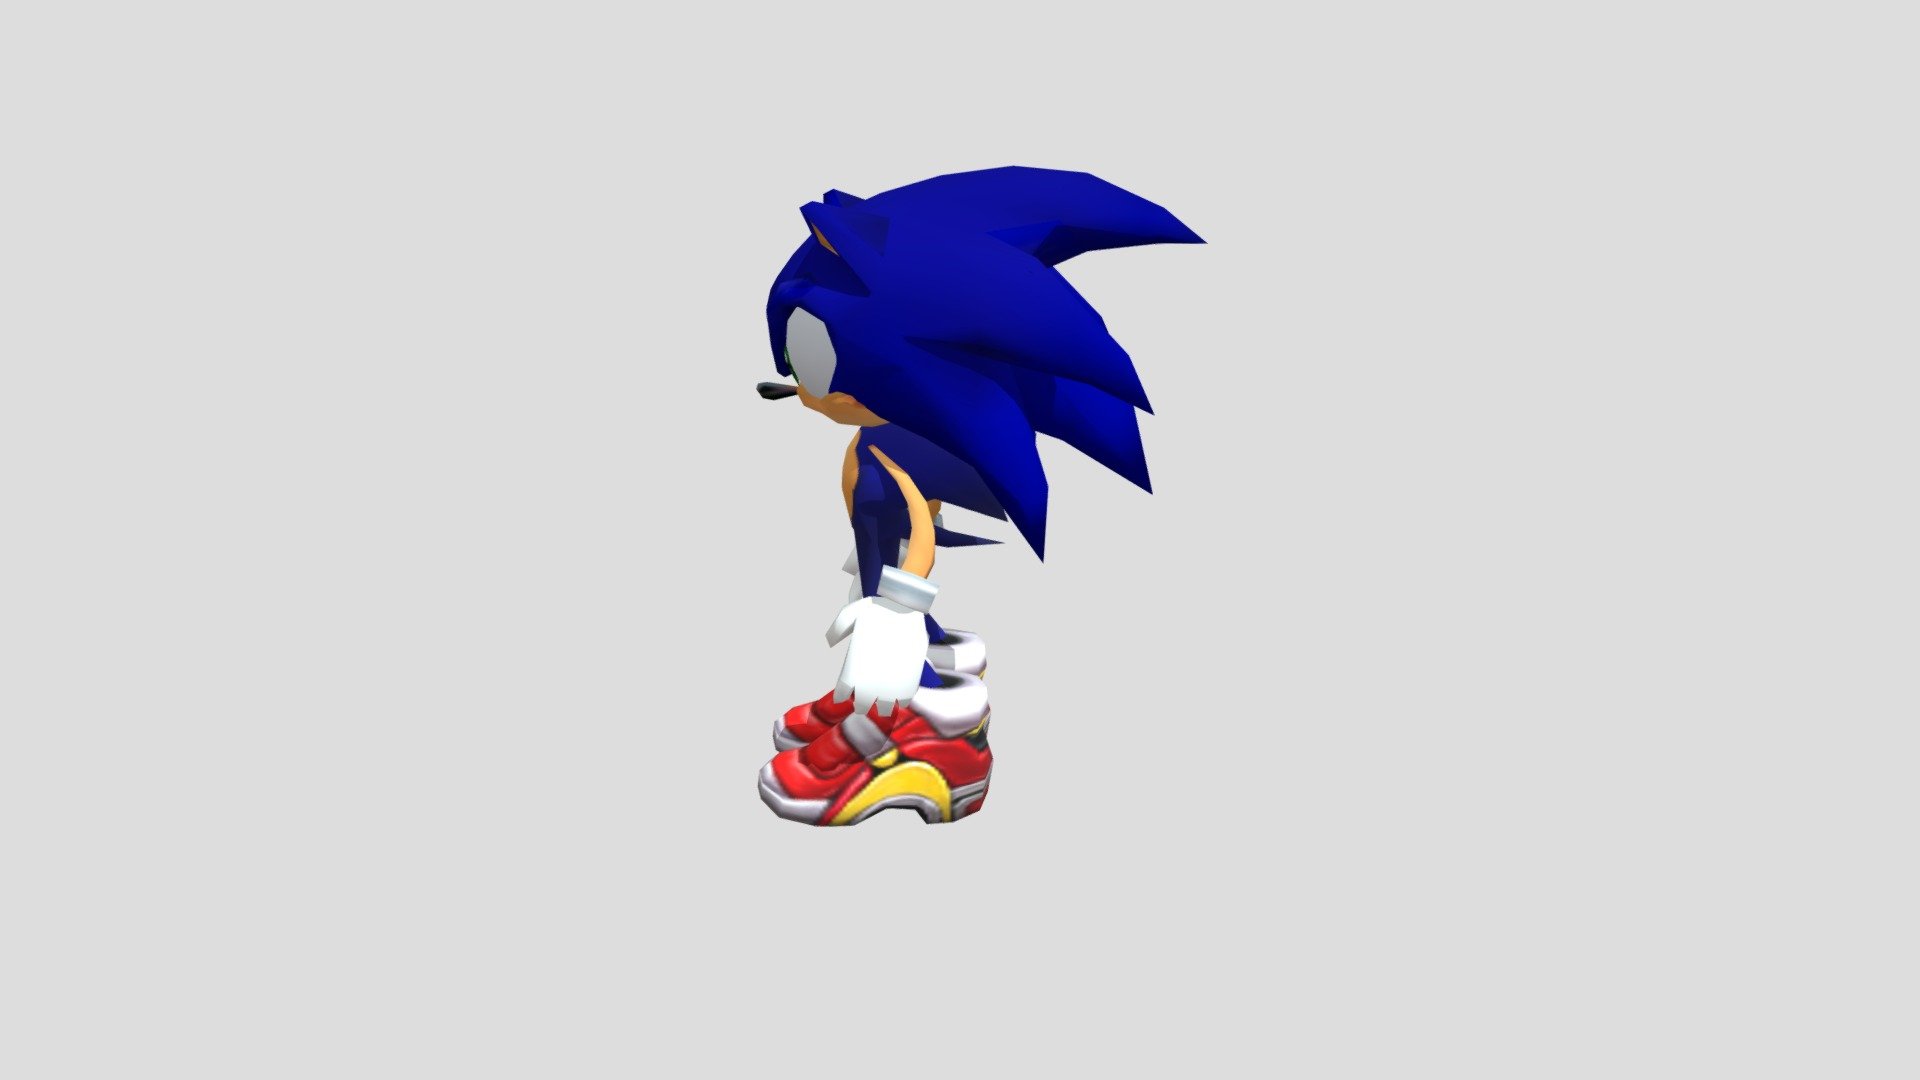 3D Sonic the Hedgehog